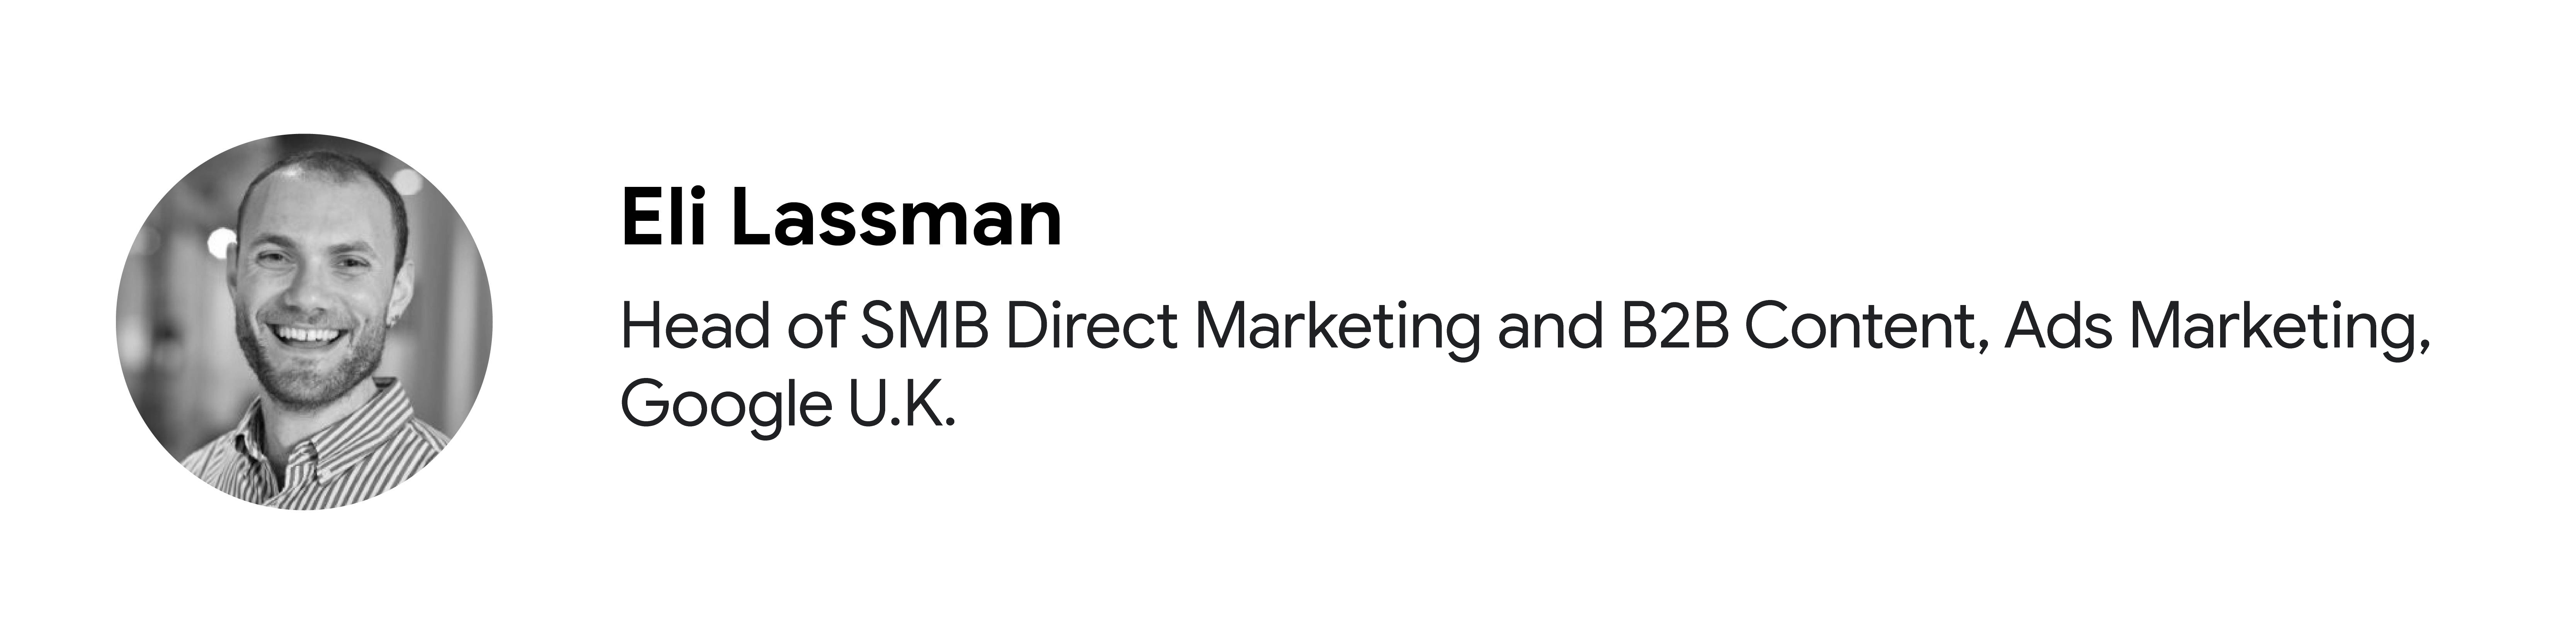 Google U.K. Head of SMB Direct Marketing and B2B Content, Ads Marketing pozisyonunda görev yapan katılımcı Eli Lassman'ın siyah beyaz portre fotoğrafı